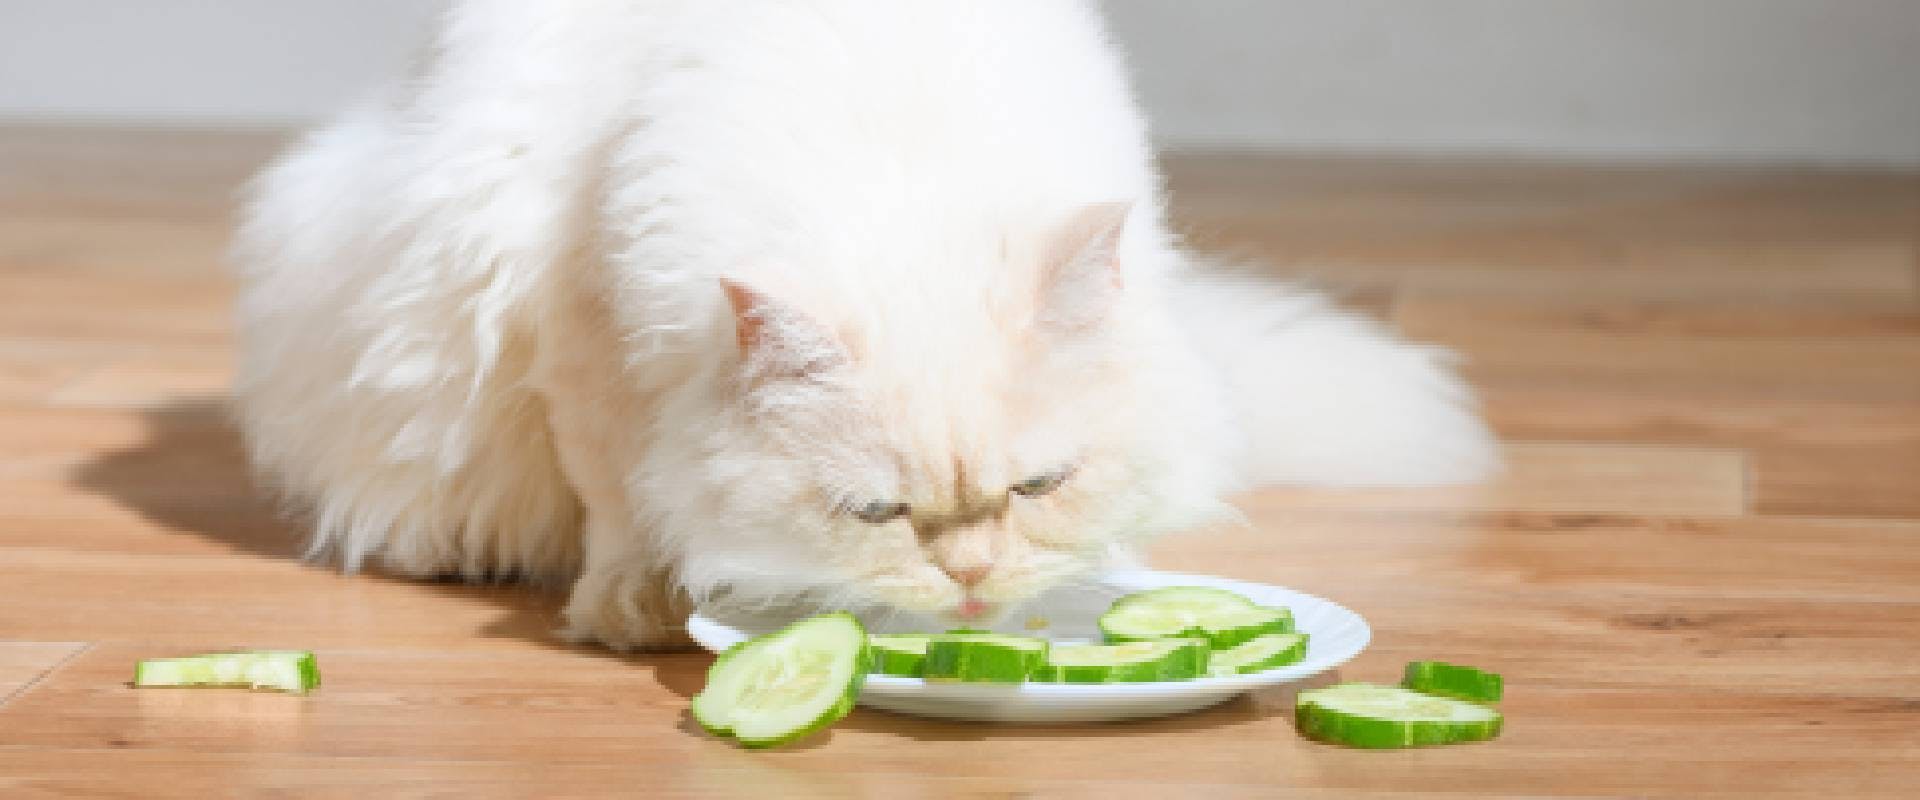 White cat eating cucumber